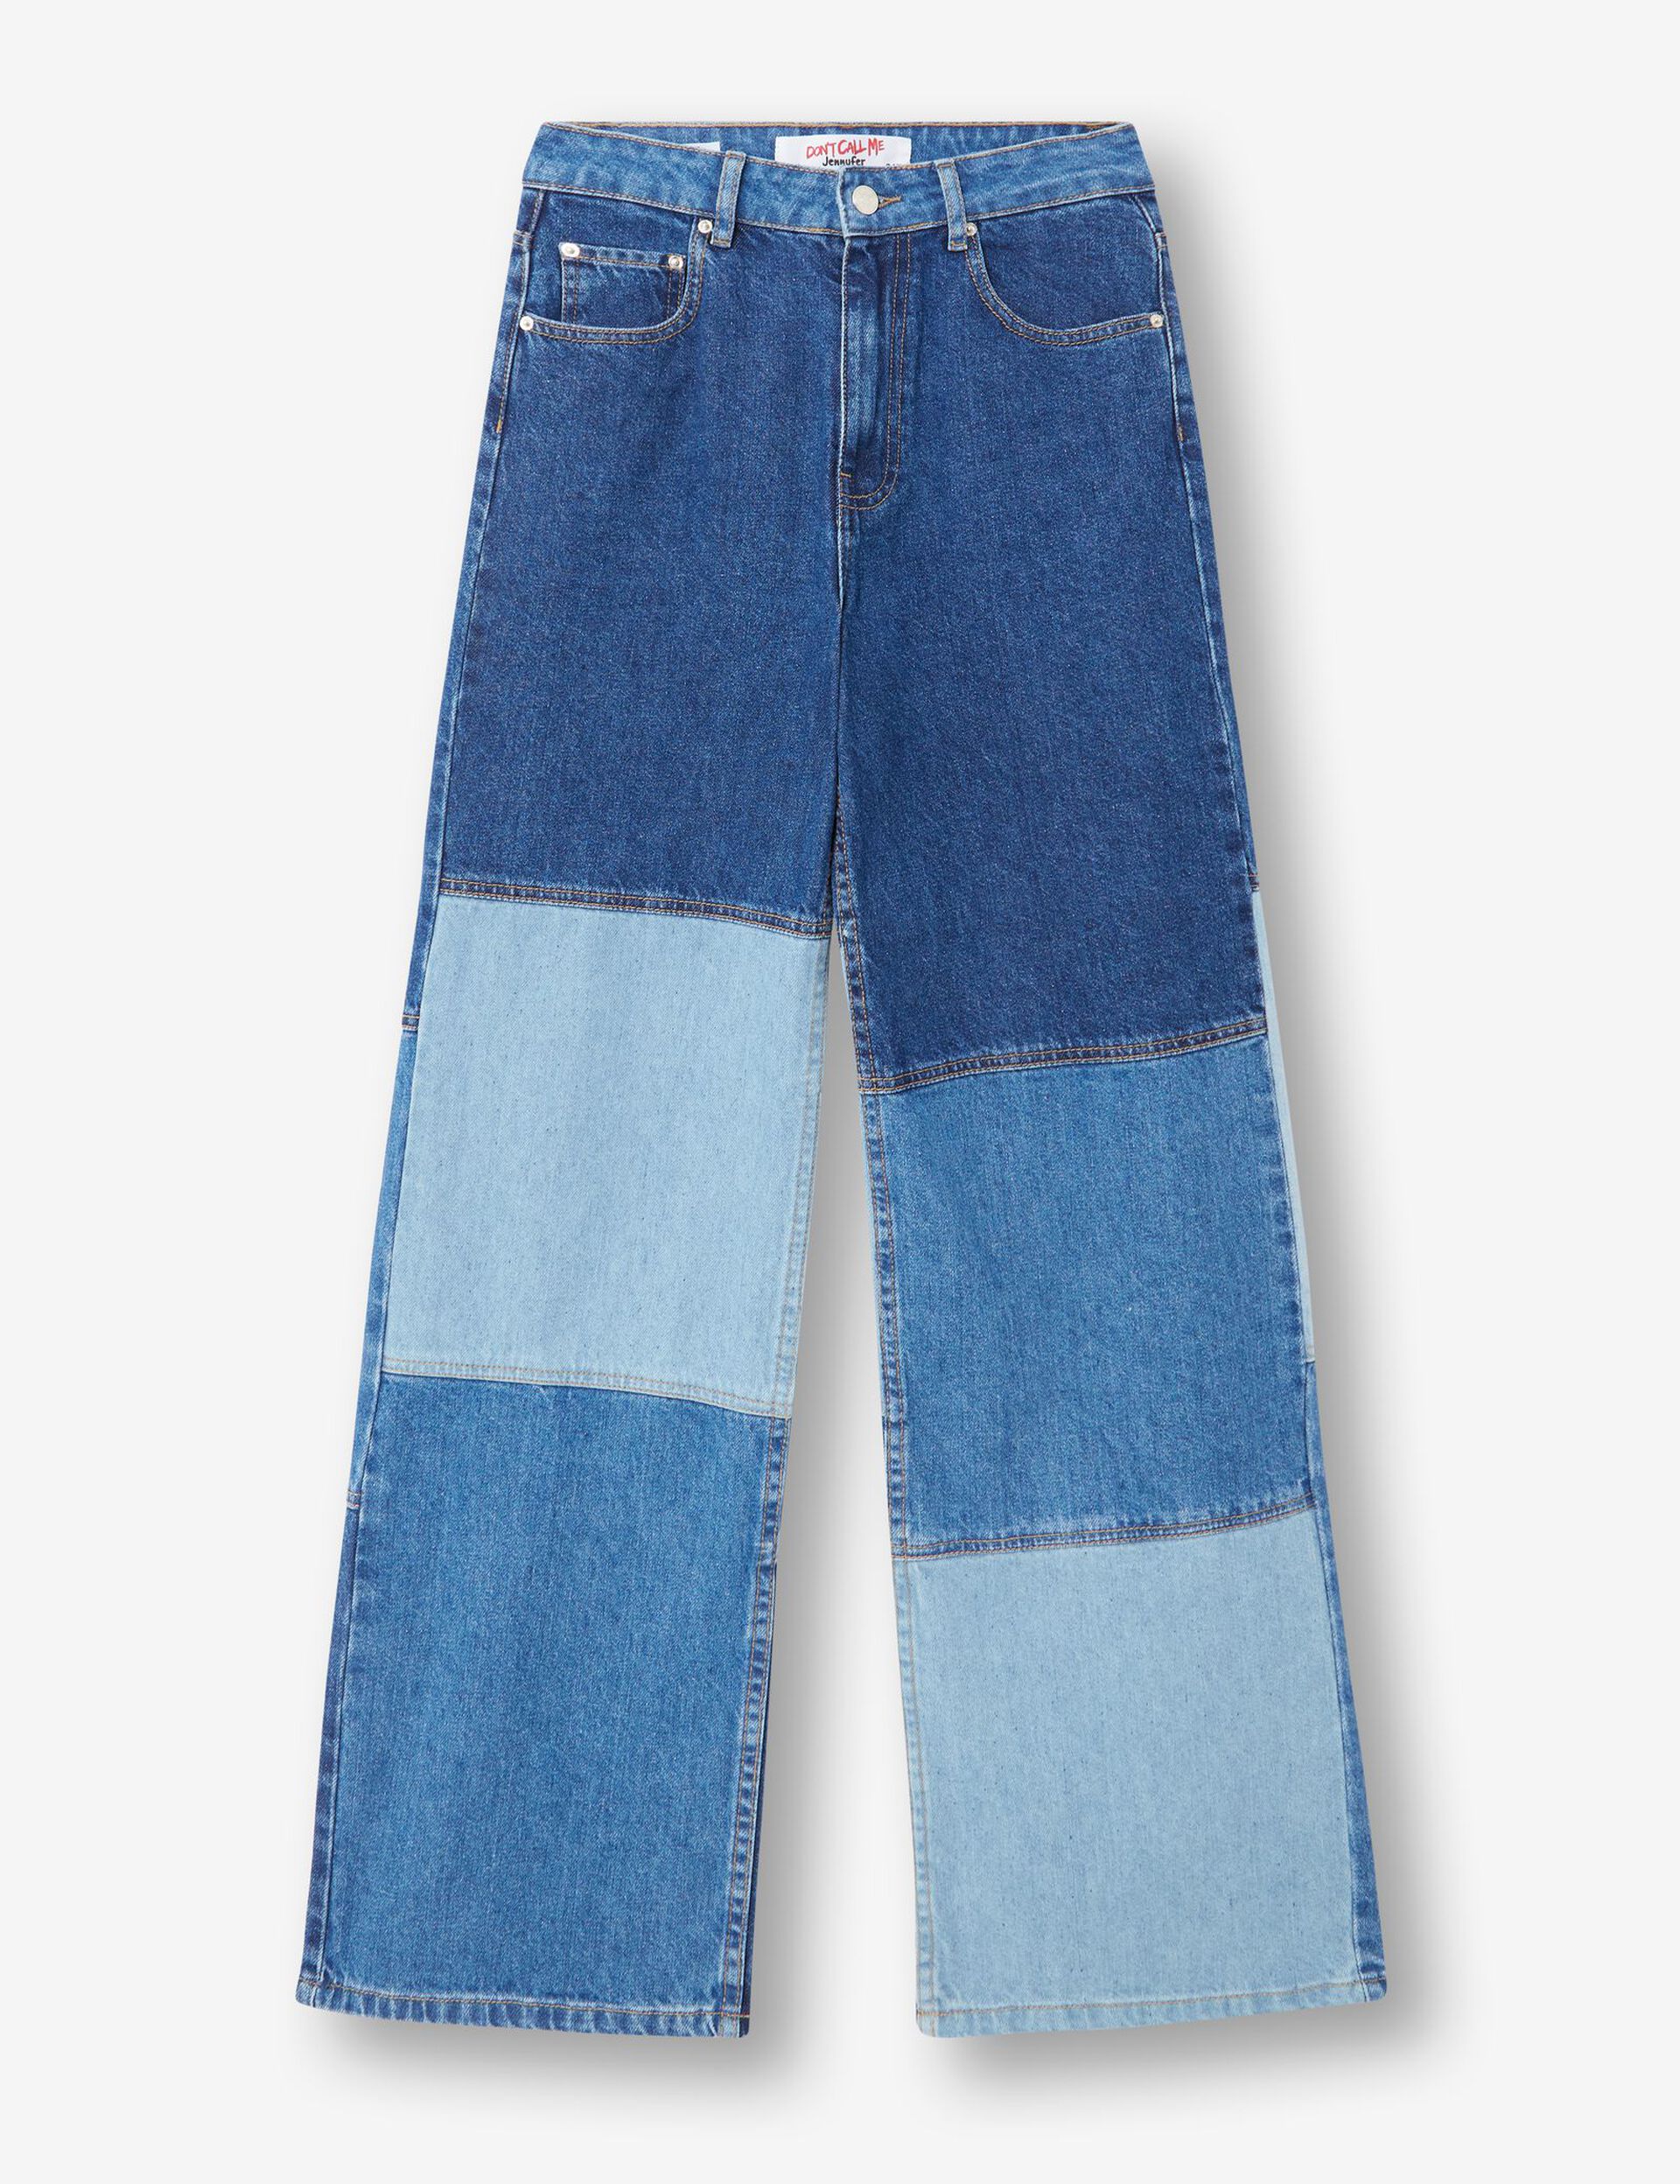 Wide-leg patchwork jeans